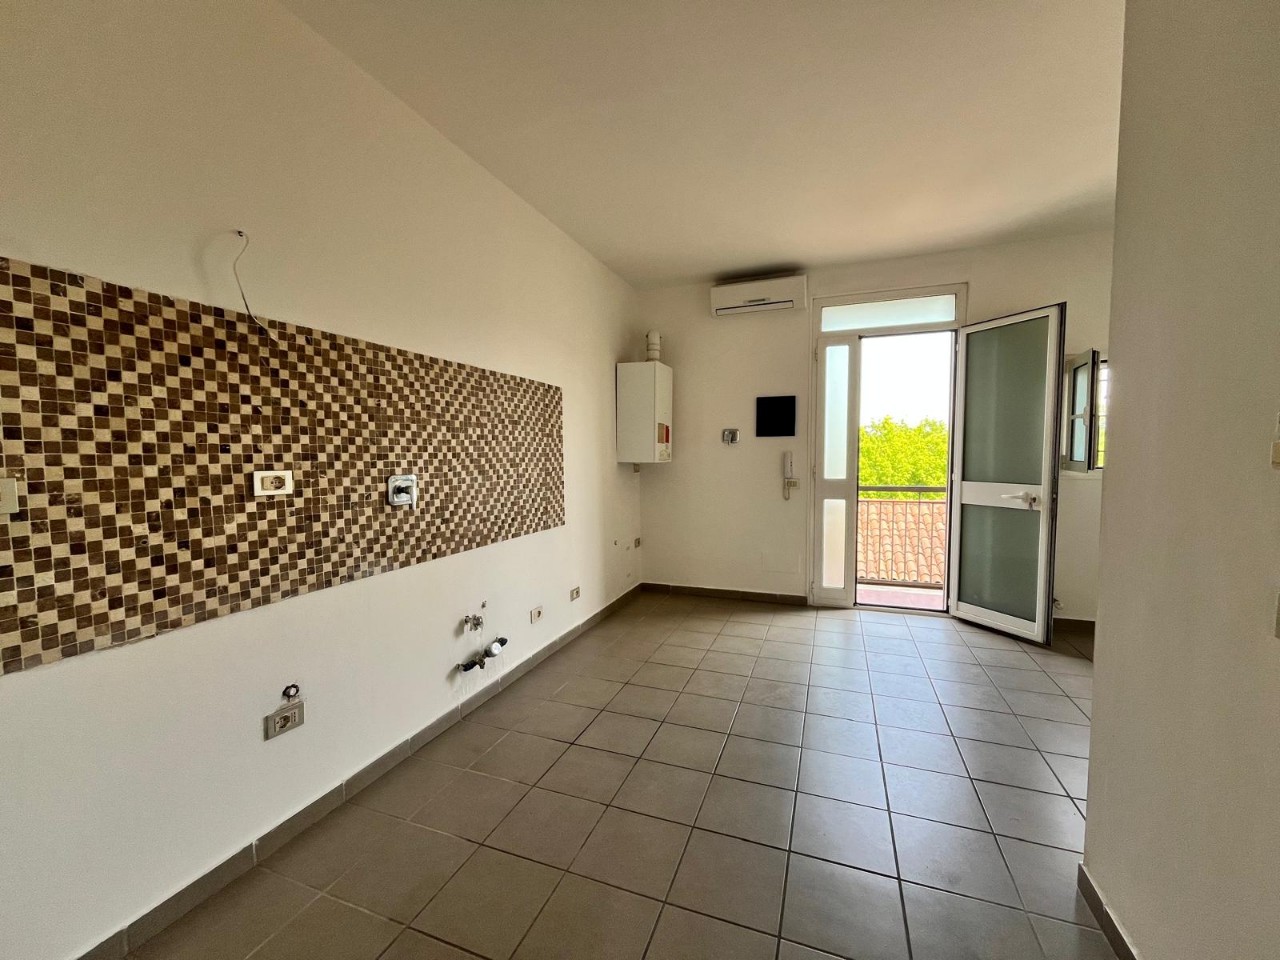 Vendita - Appartamento - Massarenti - Bologna - € 140.000